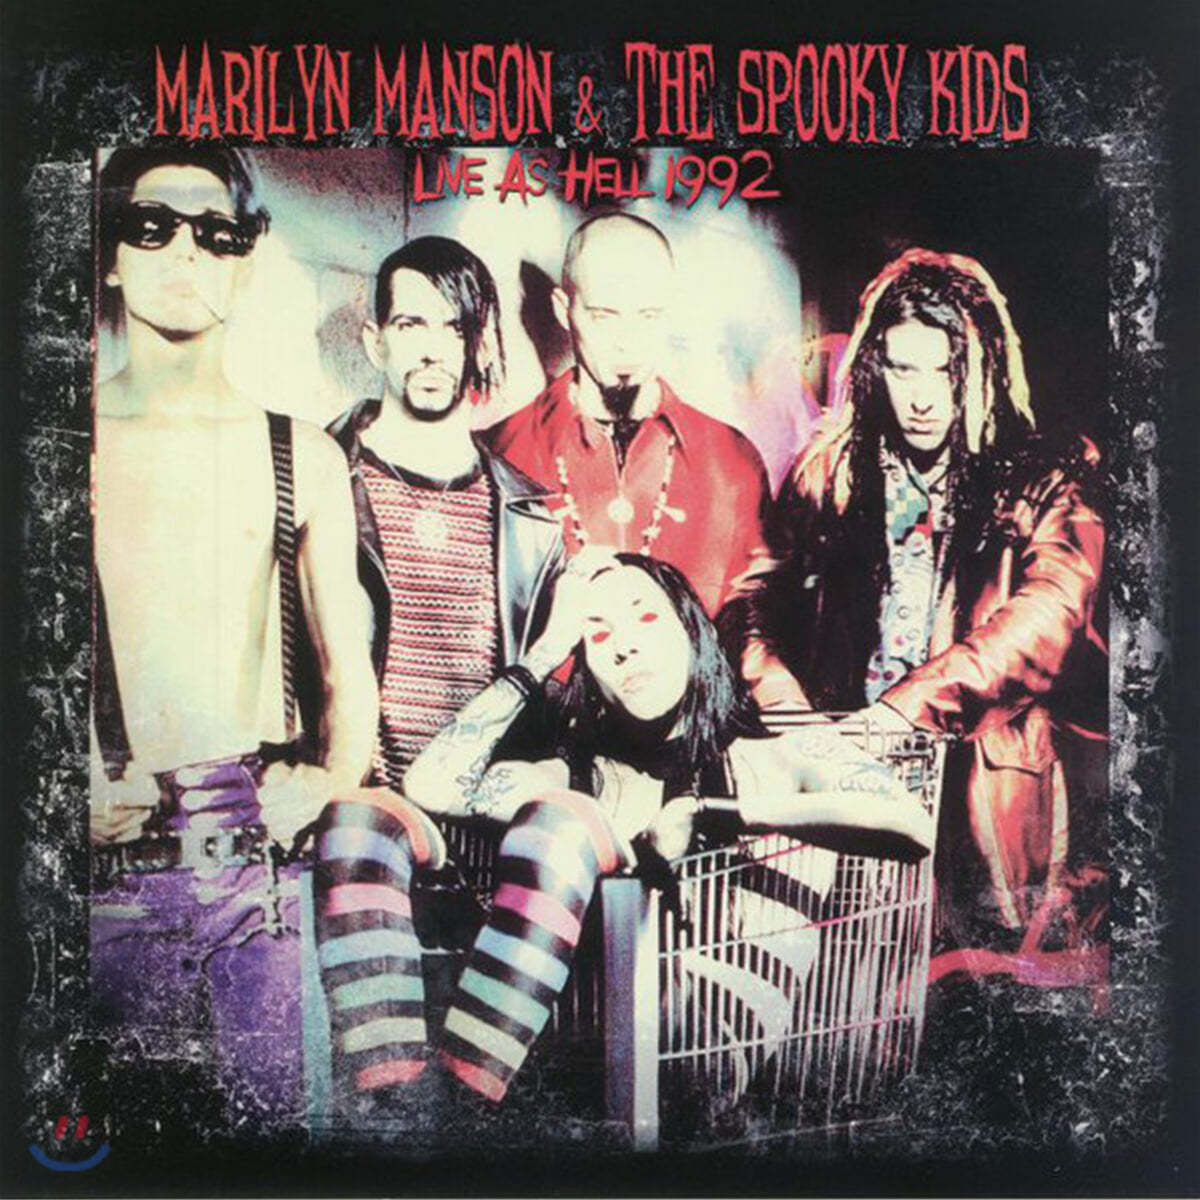 Marilyn Manson &amp; The Spooky Kids (마릴린 맨슨 앤 스푸키 키즈) - Live As Hell 1992 [LP]